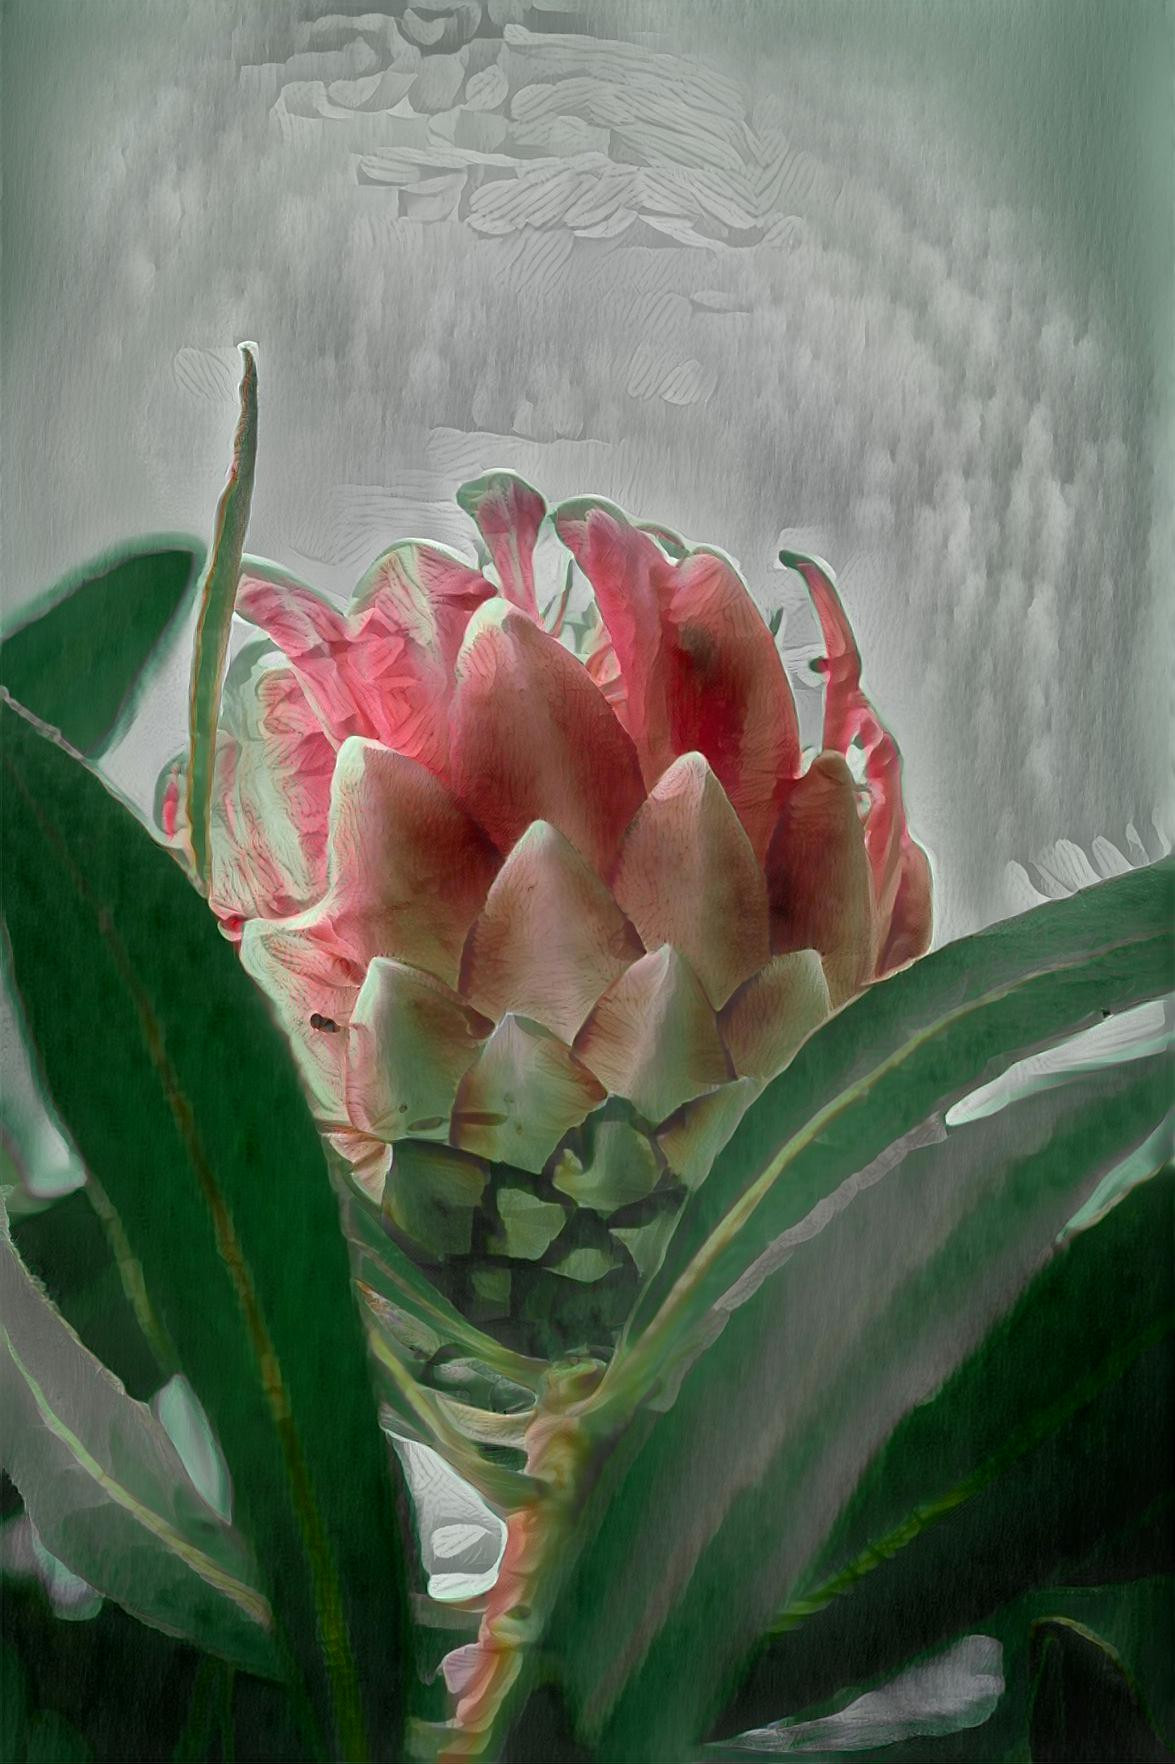 Protea Flower. Original photo by Douglas Bagg on Unsplash.